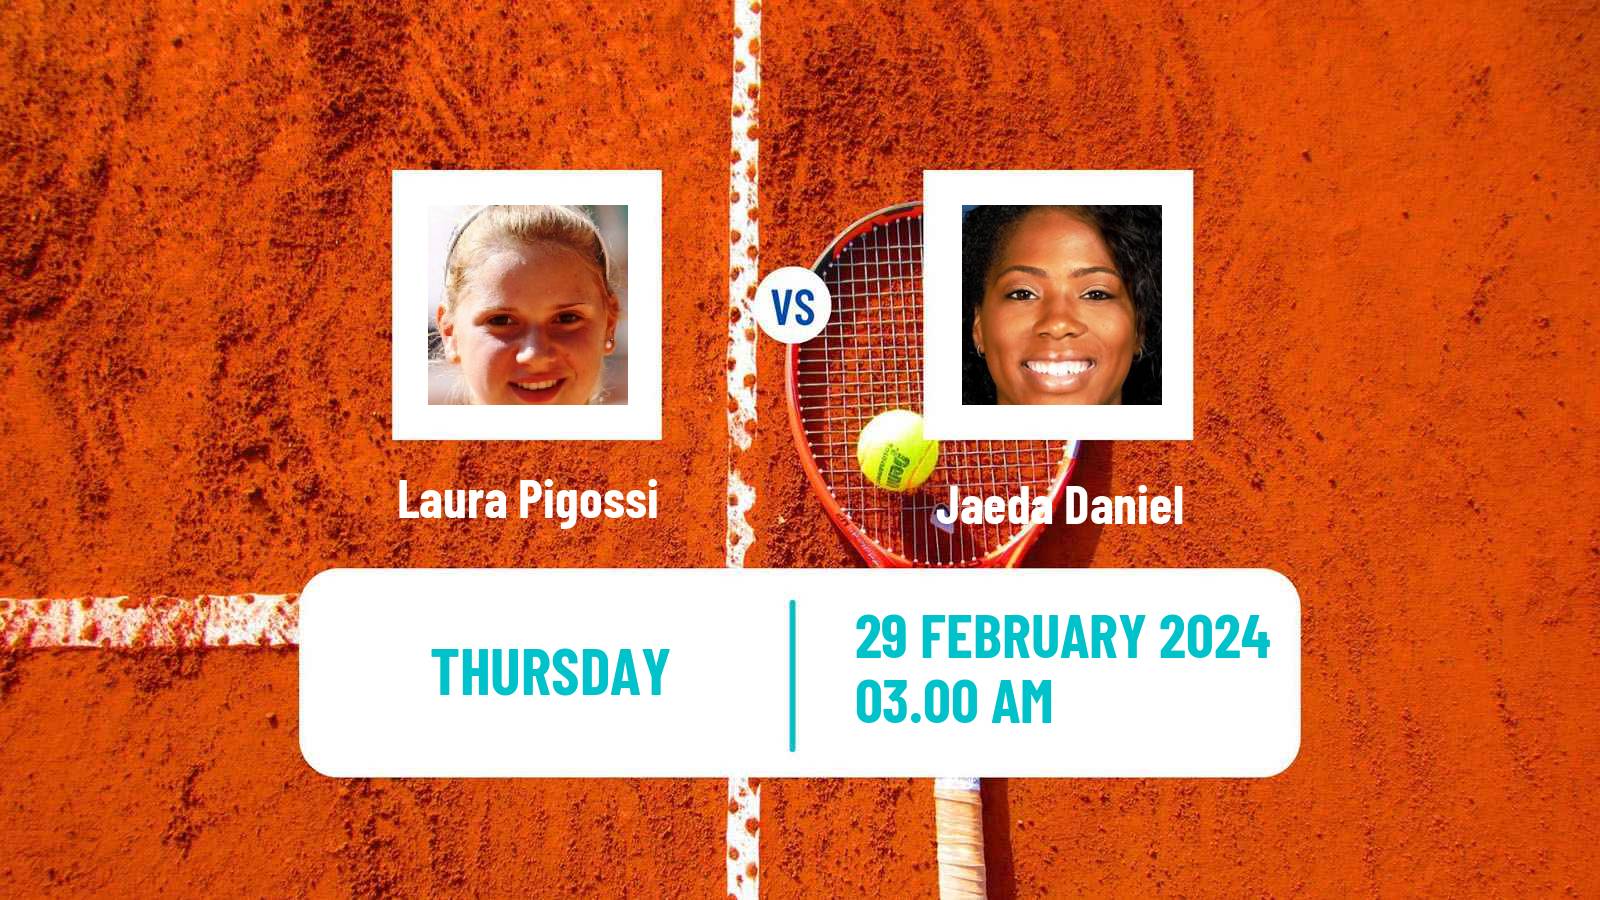 Tennis ITF W50 Pretoria 2 Women Laura Pigossi - Jaeda Daniel